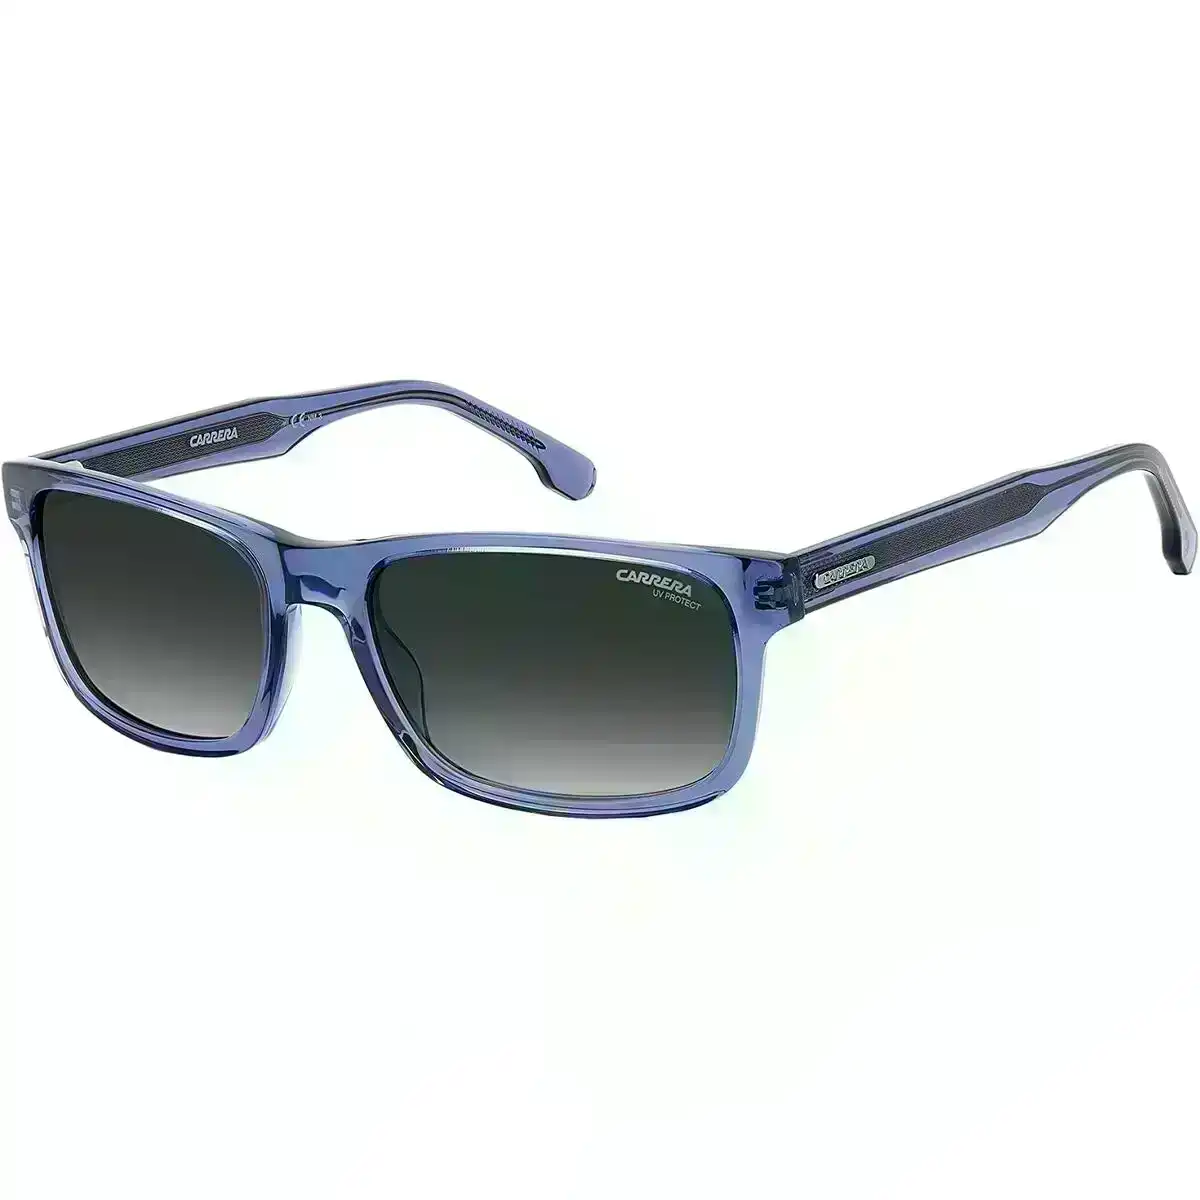 Men's Sunglasses Carrera Carrera 299_S